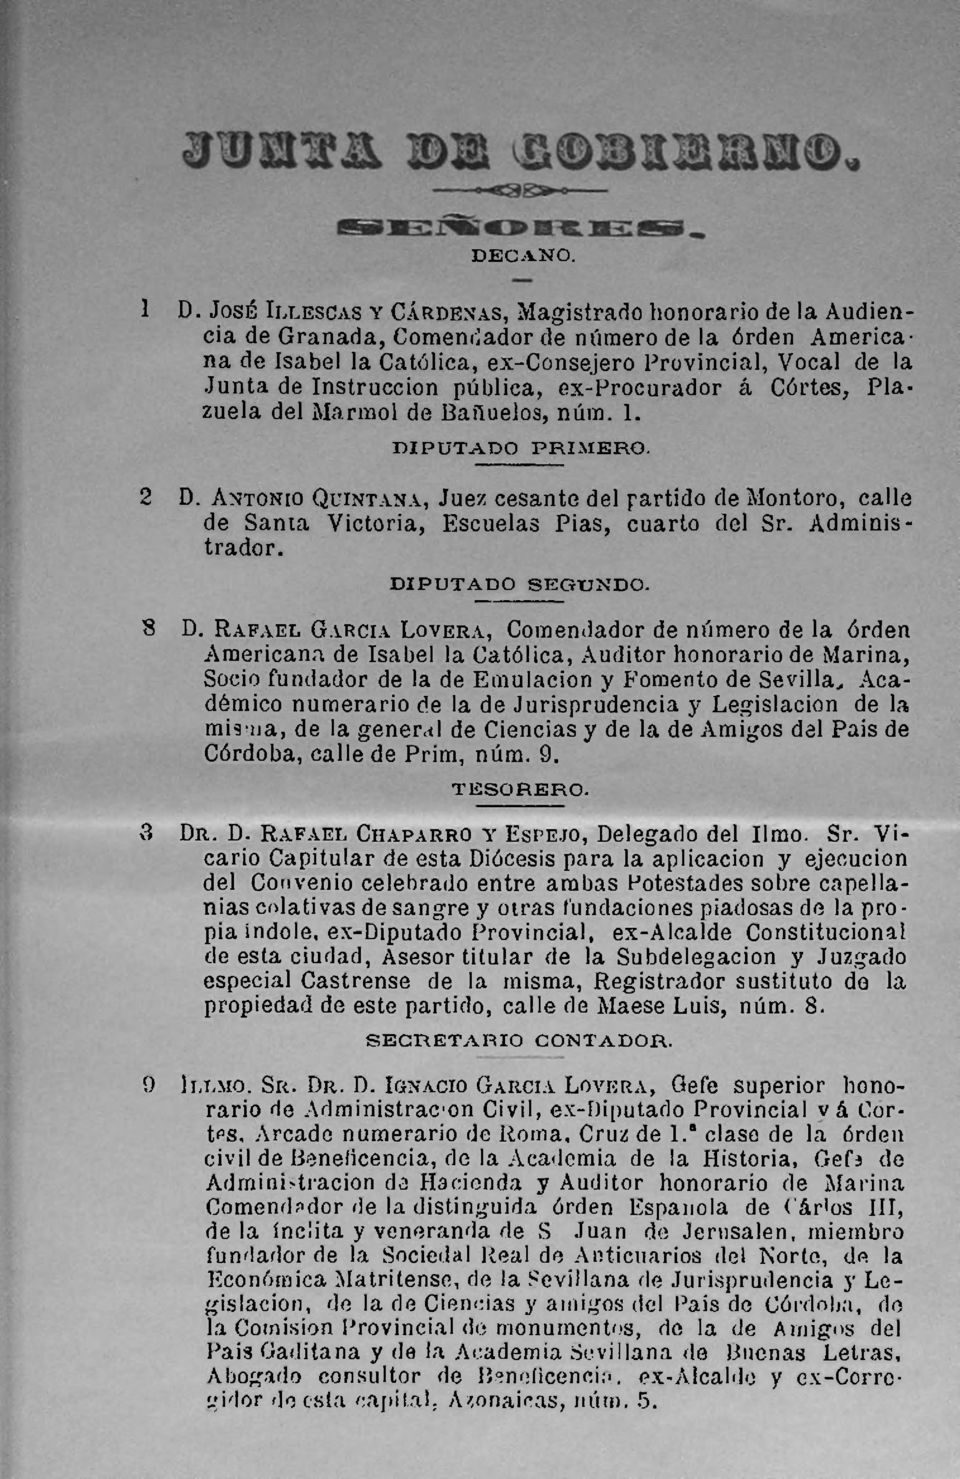 pública, ex-procurador á Córtes, Plazuela del Marmol de Bafluelos, núm. 1. DIPUTADO PRIMERO. 2 D.